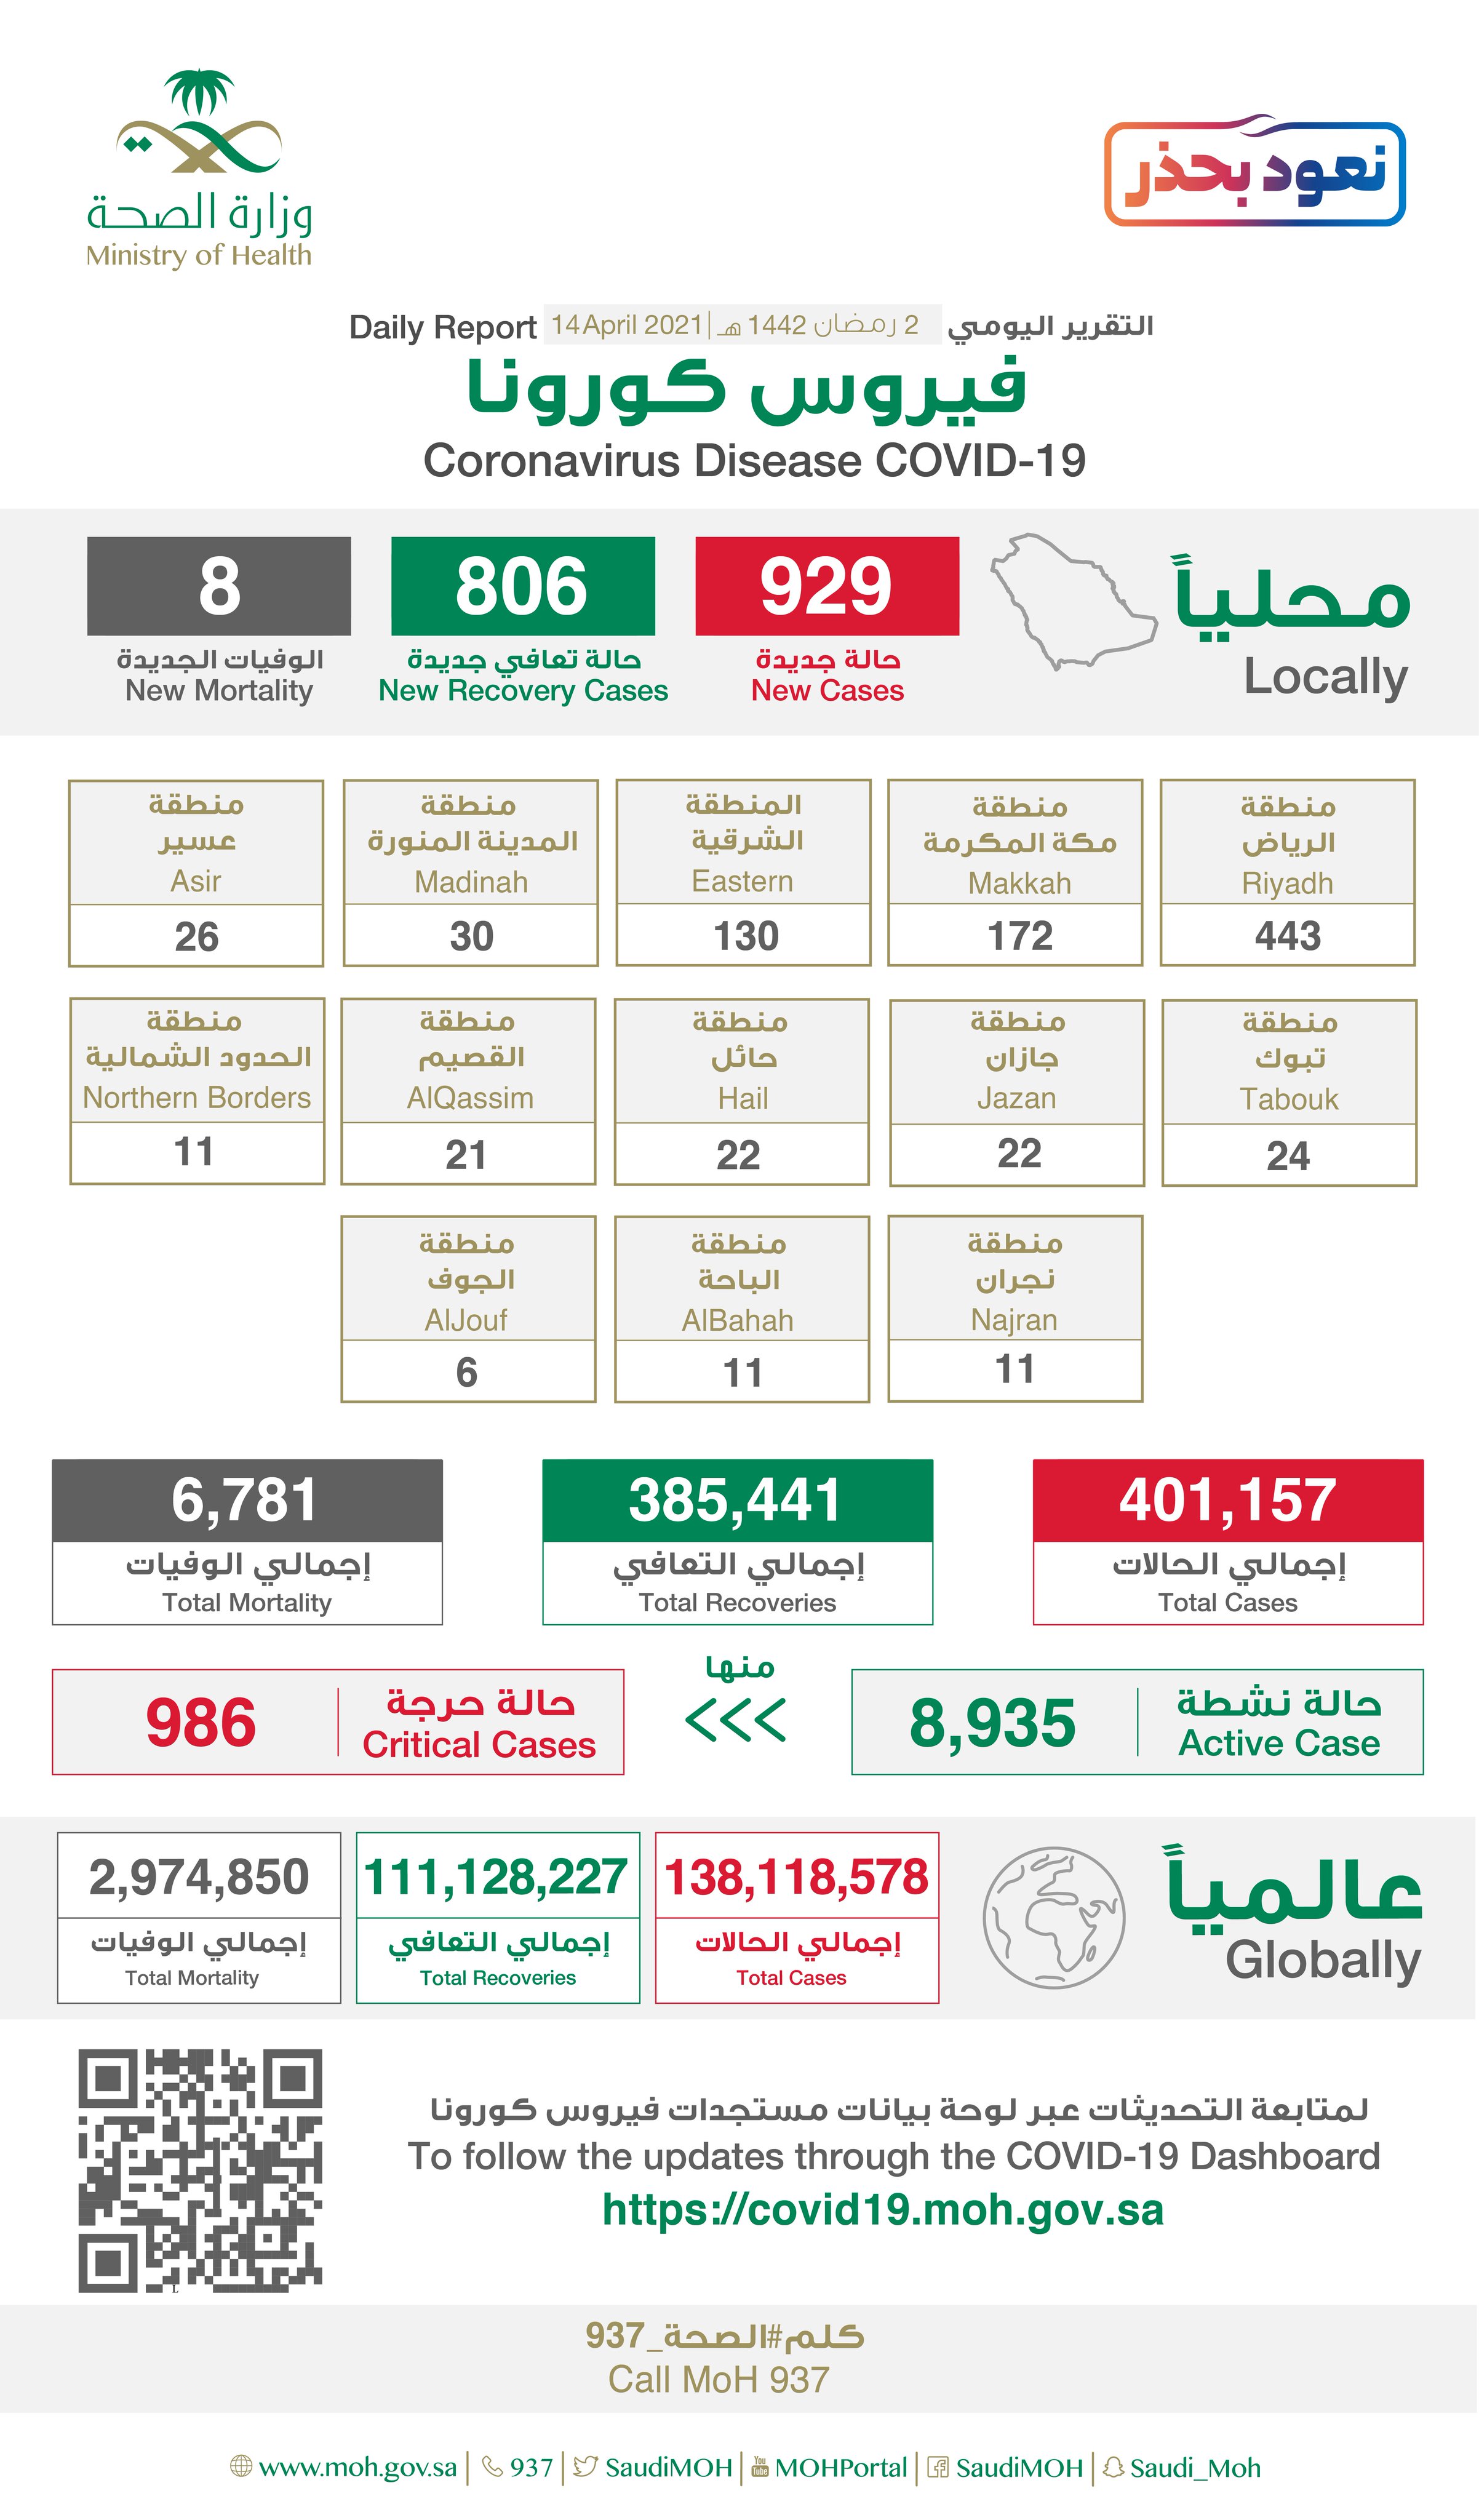 Saudi Arabia Coronavirus : Total Cases :401,157, New Cases : 929, Cured : 385,441, Deaths: 6,781, Active Cases : 8,935